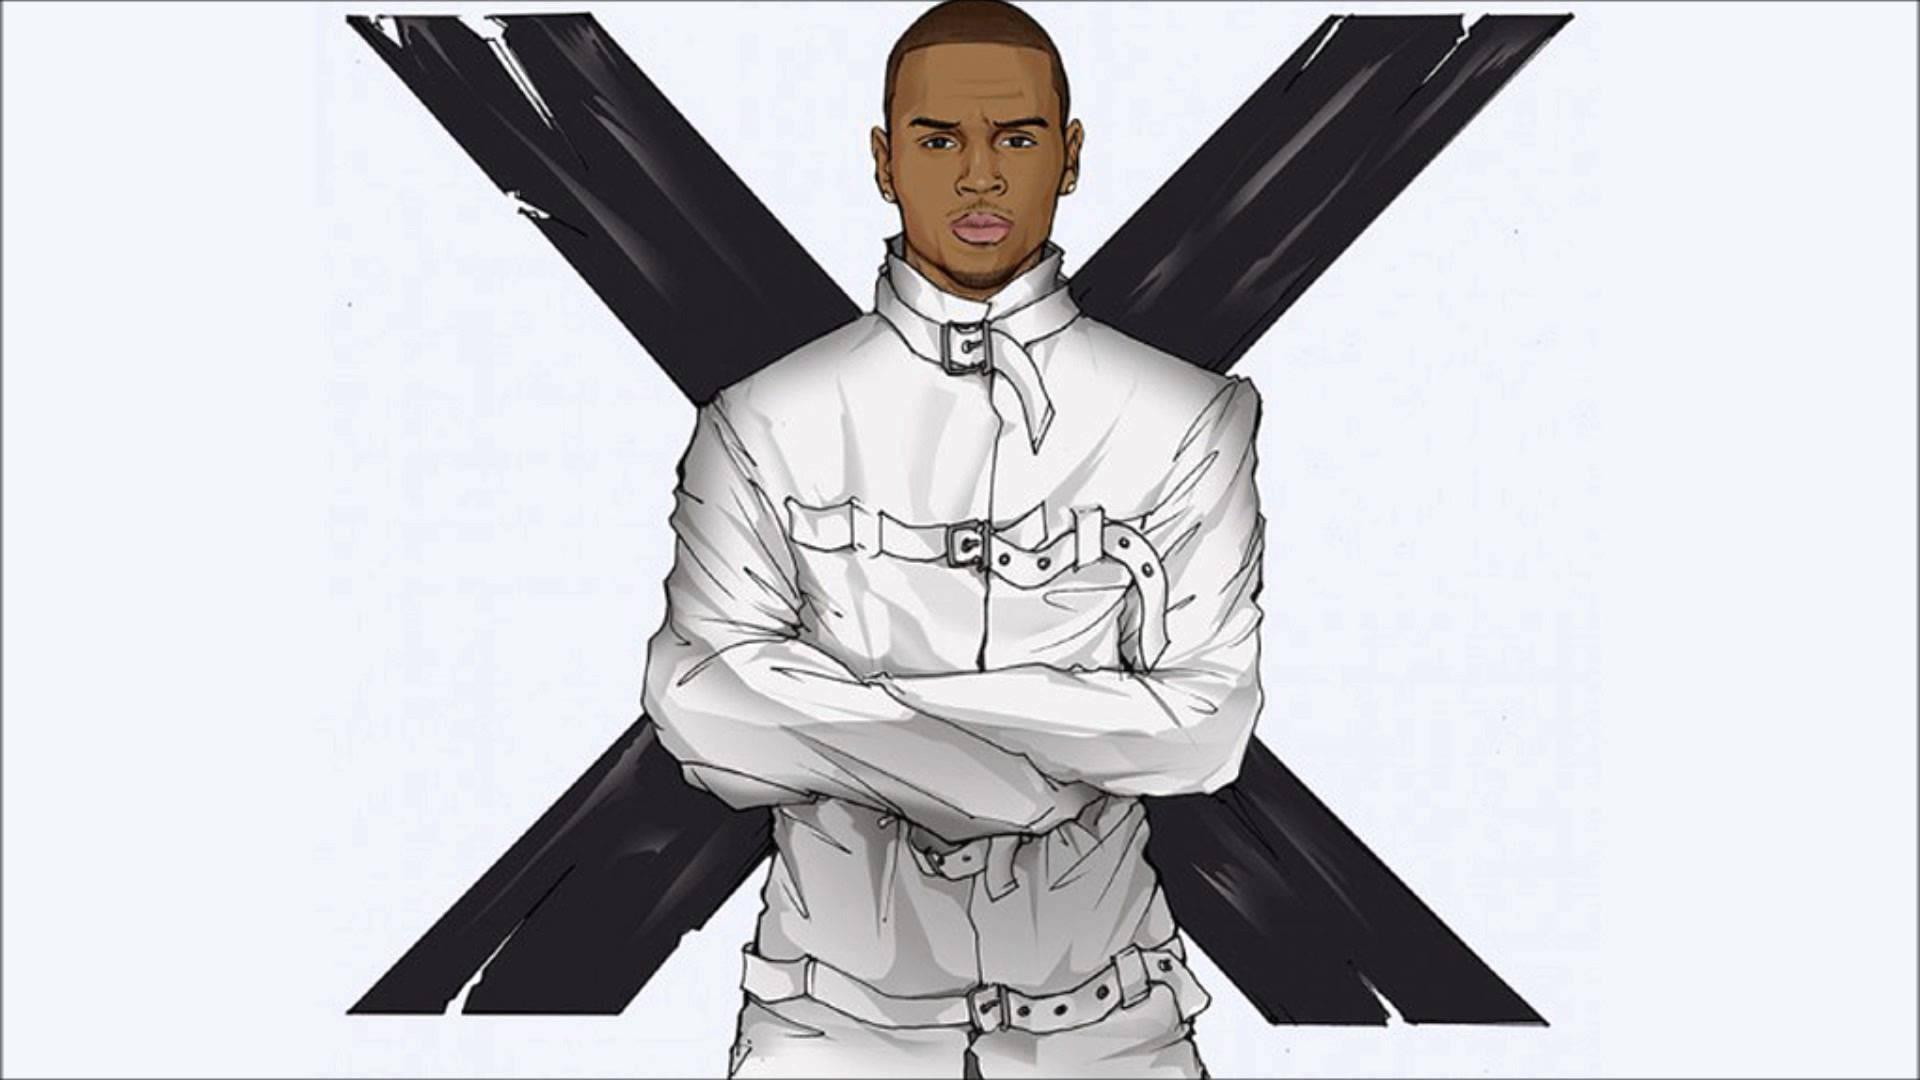 Chris Brown Wallpaper, Dancer, HD Image, X, Music Album